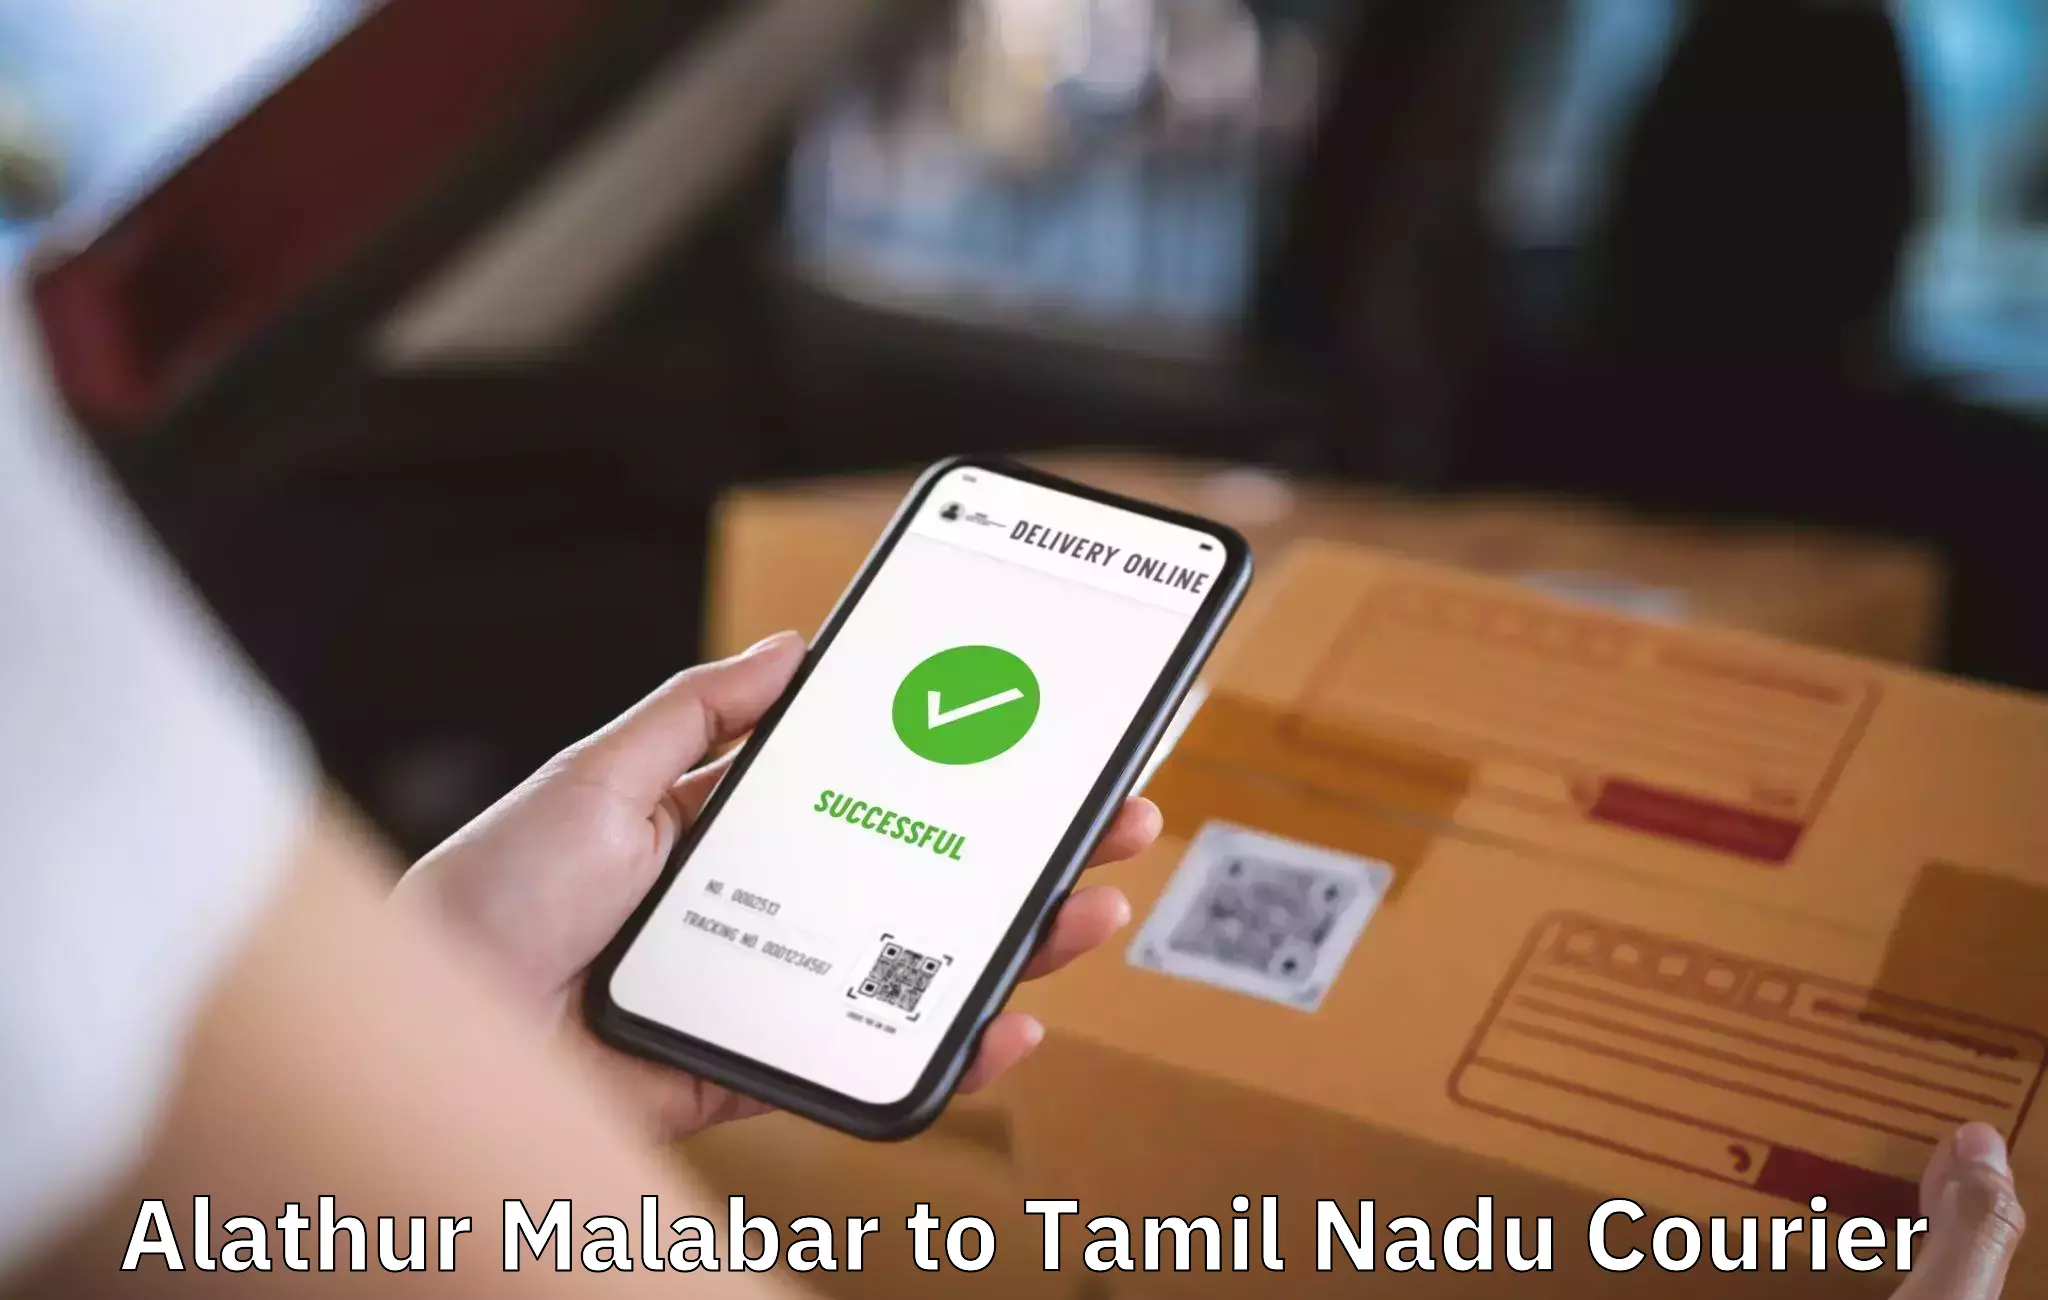 Furniture delivery service Alathur Malabar to Ayyampettai